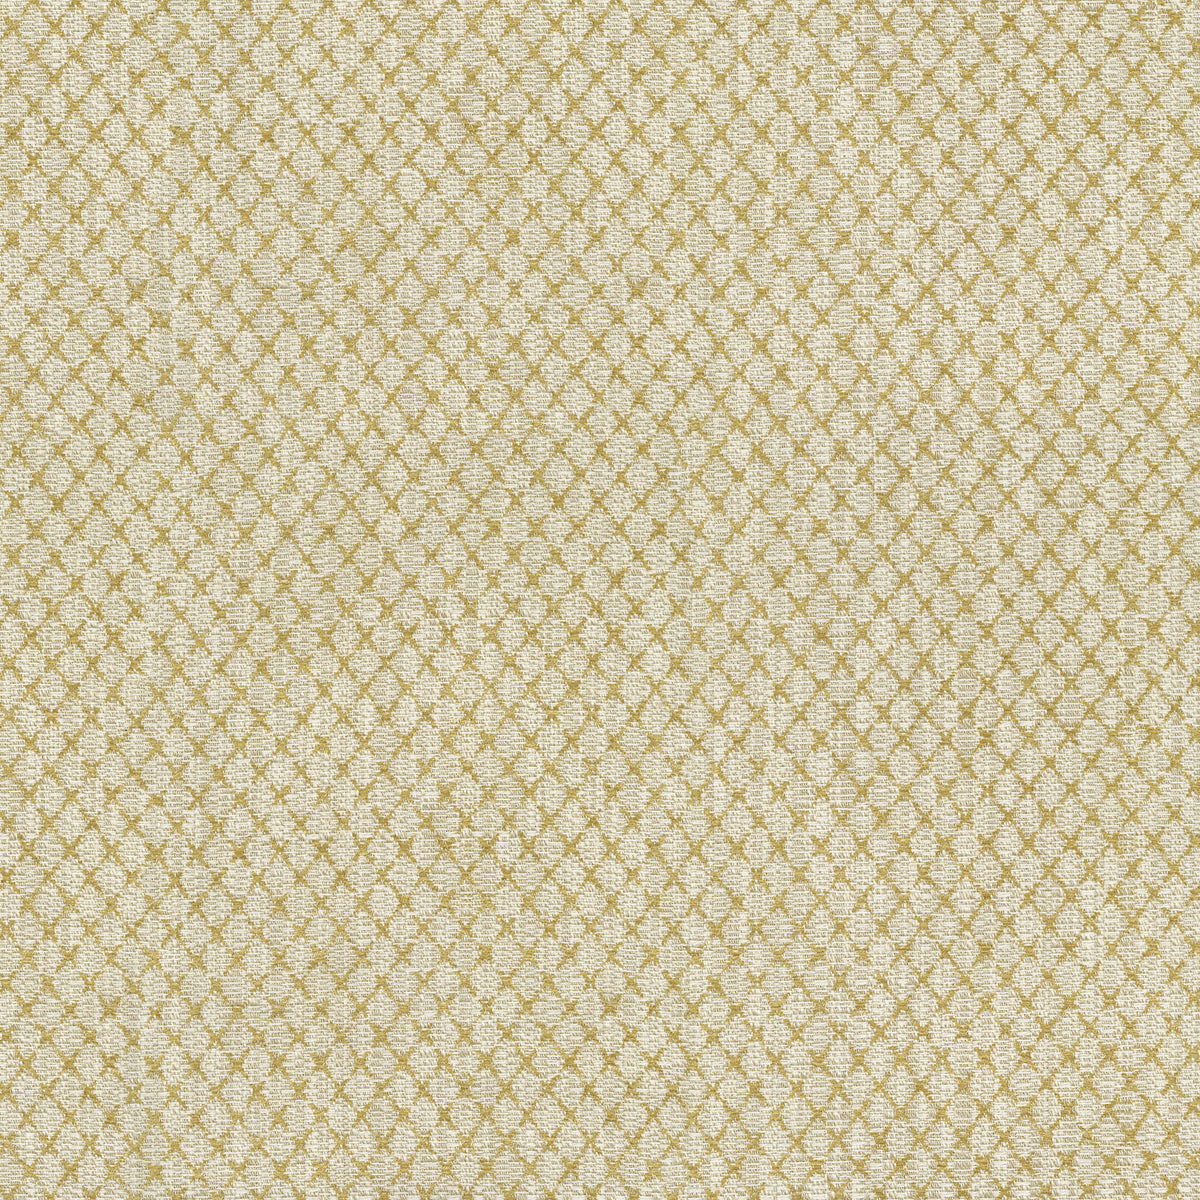 P/K Lifestyles Vega - Gold 411753 Upholstery Fabric